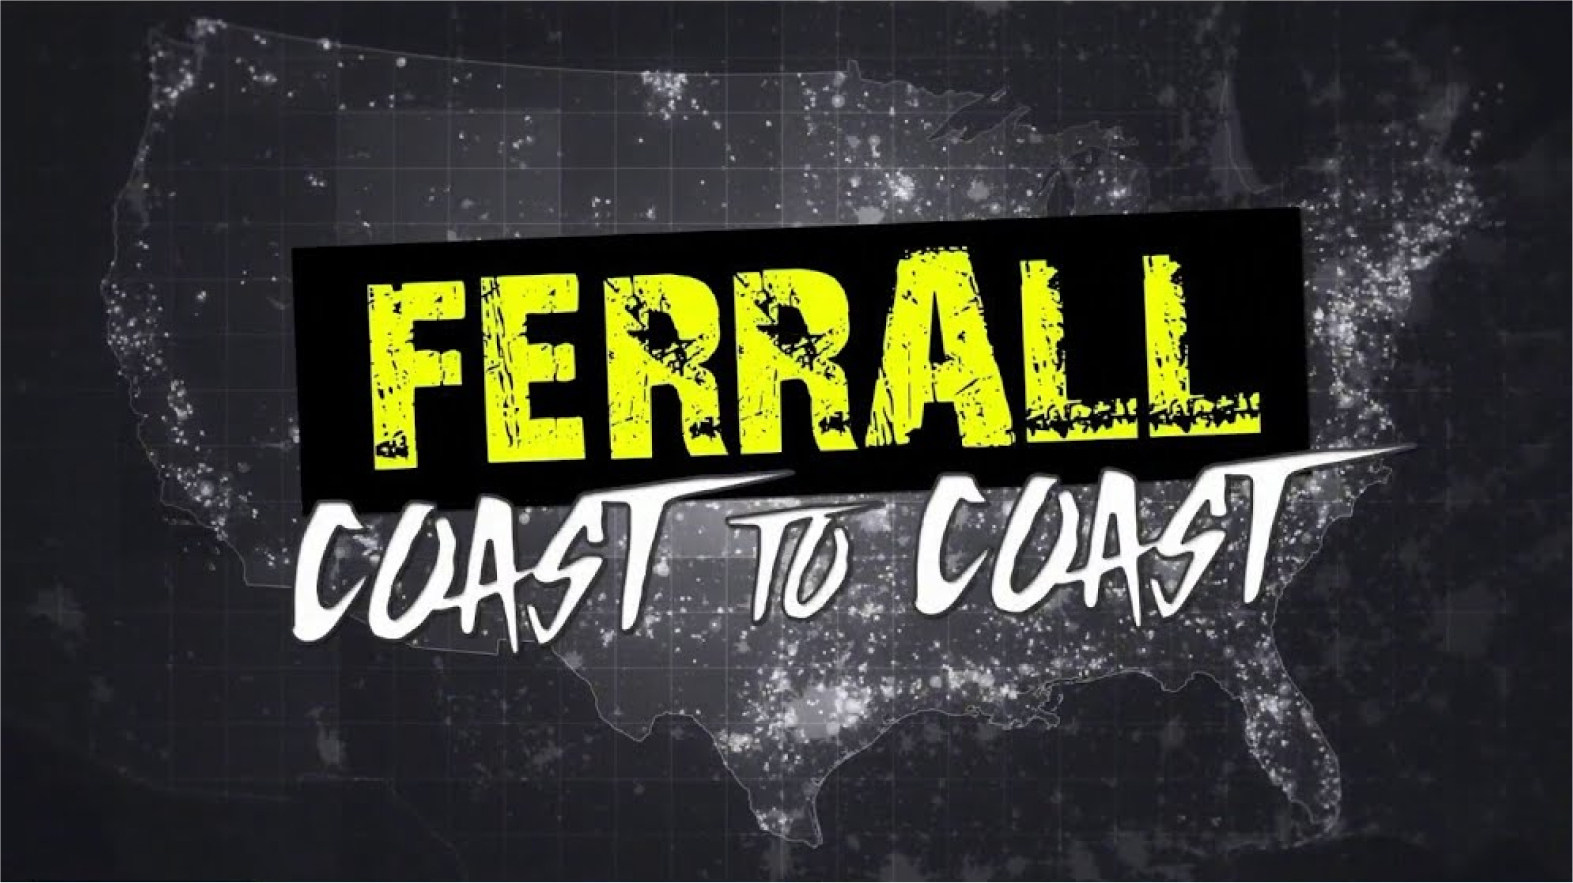 Ferrall Coast To Cost